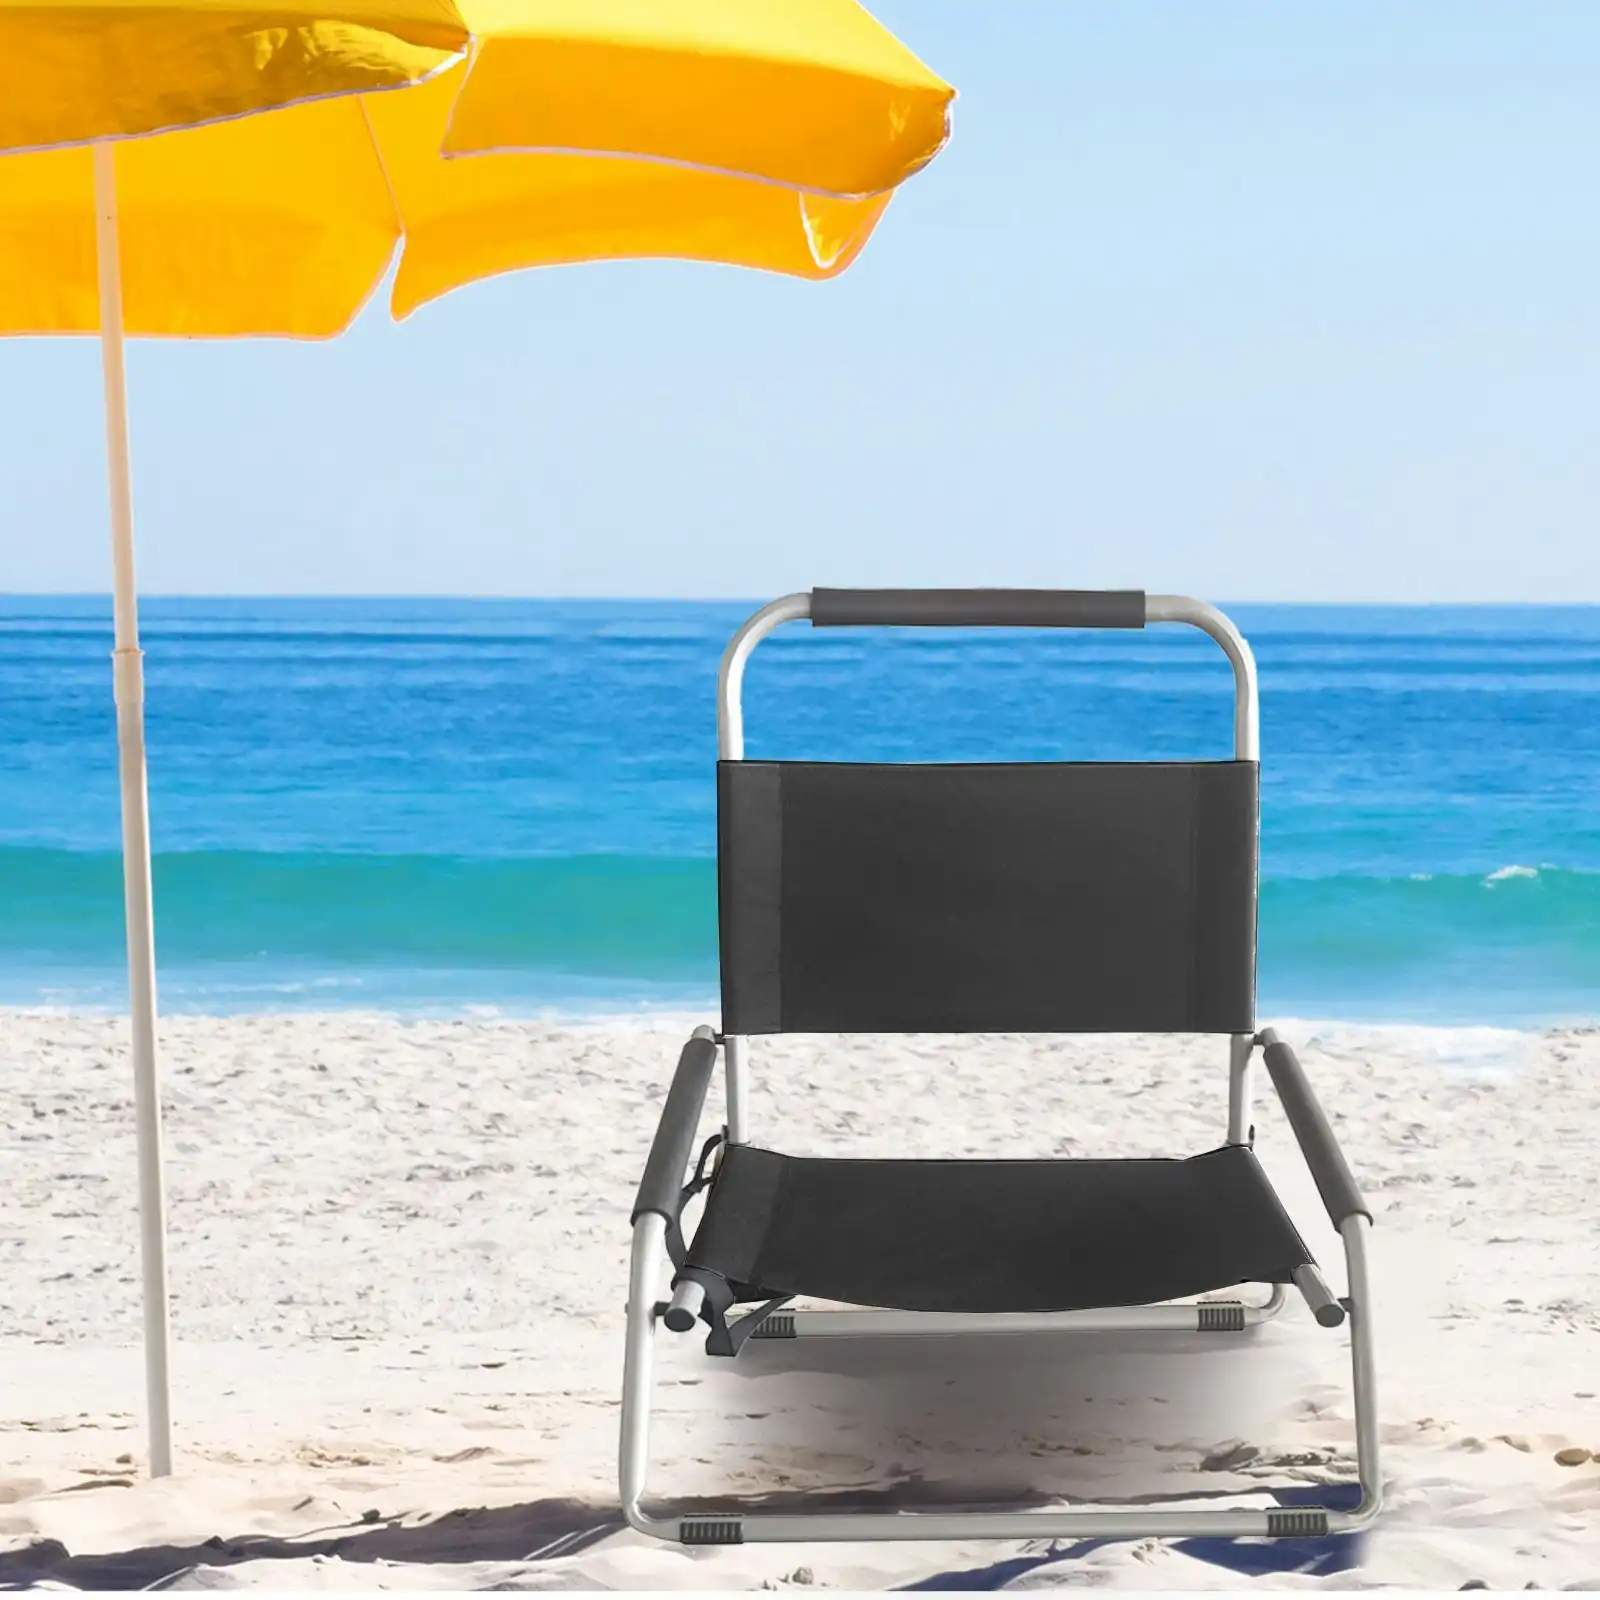 Havana Outdoors Beach Chair 2 Pack Folding Portable Summer Camping Outdoors